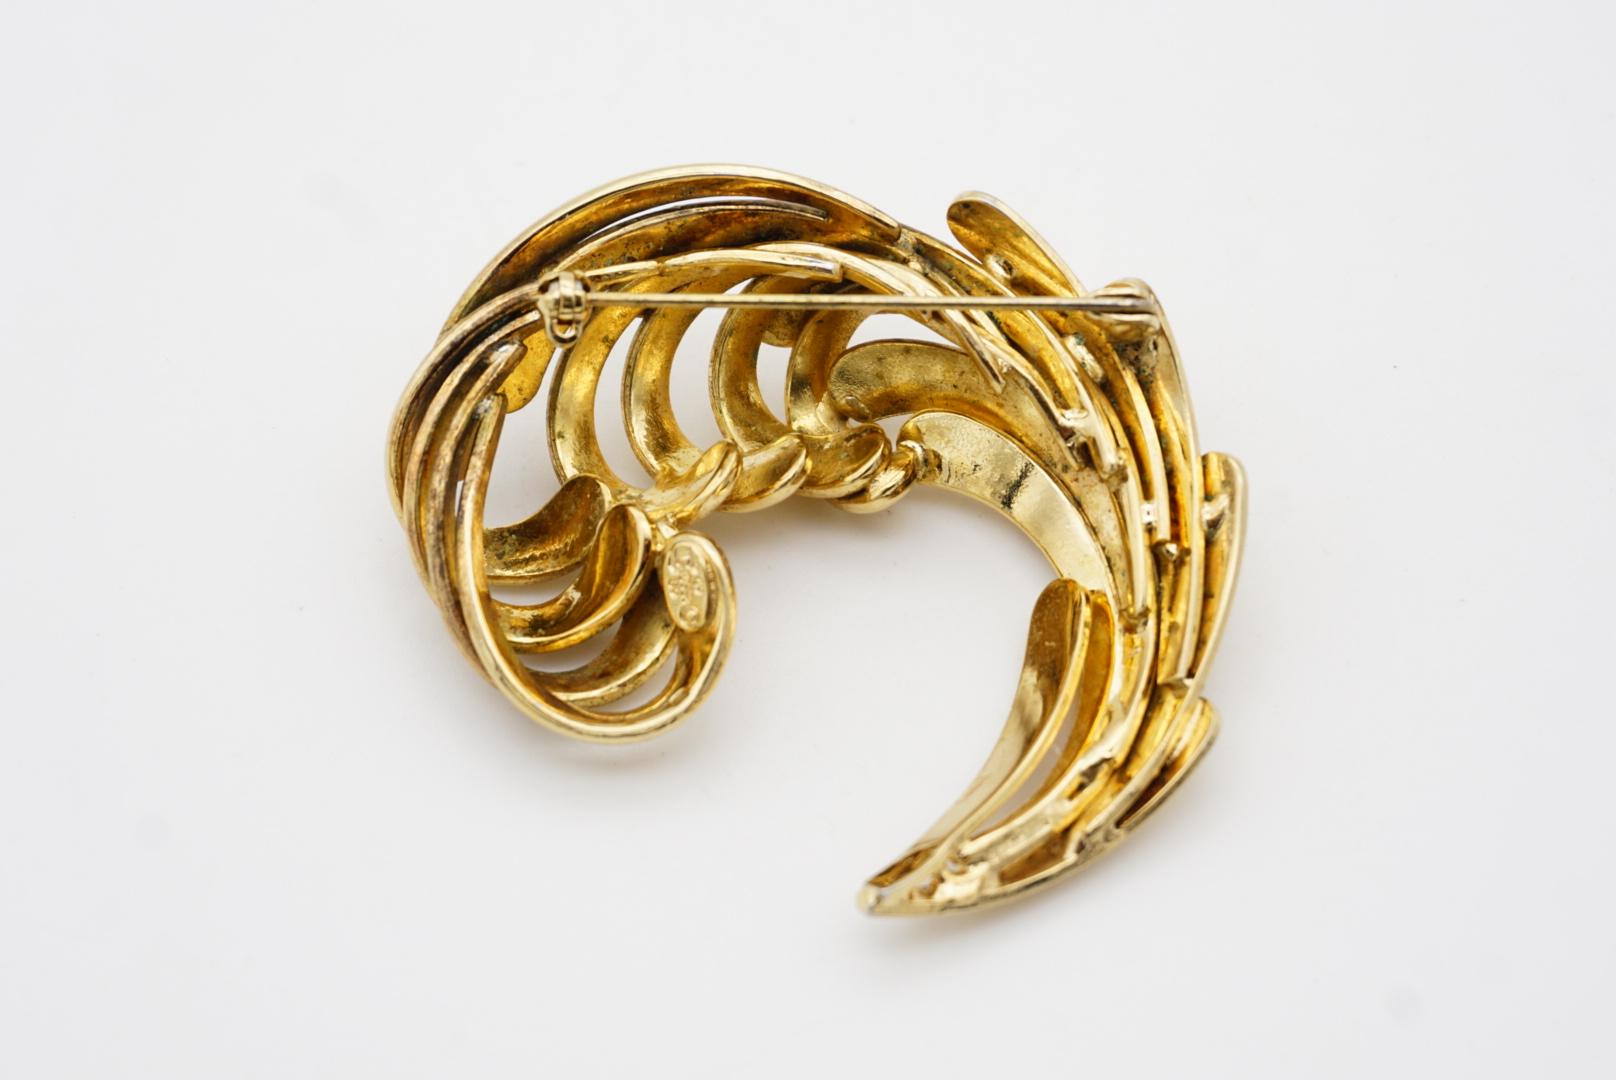 Christian Dior GROSSE 1959 Vintage Extra Large Openwork Swirl Twist Gold Brooch For Sale 4